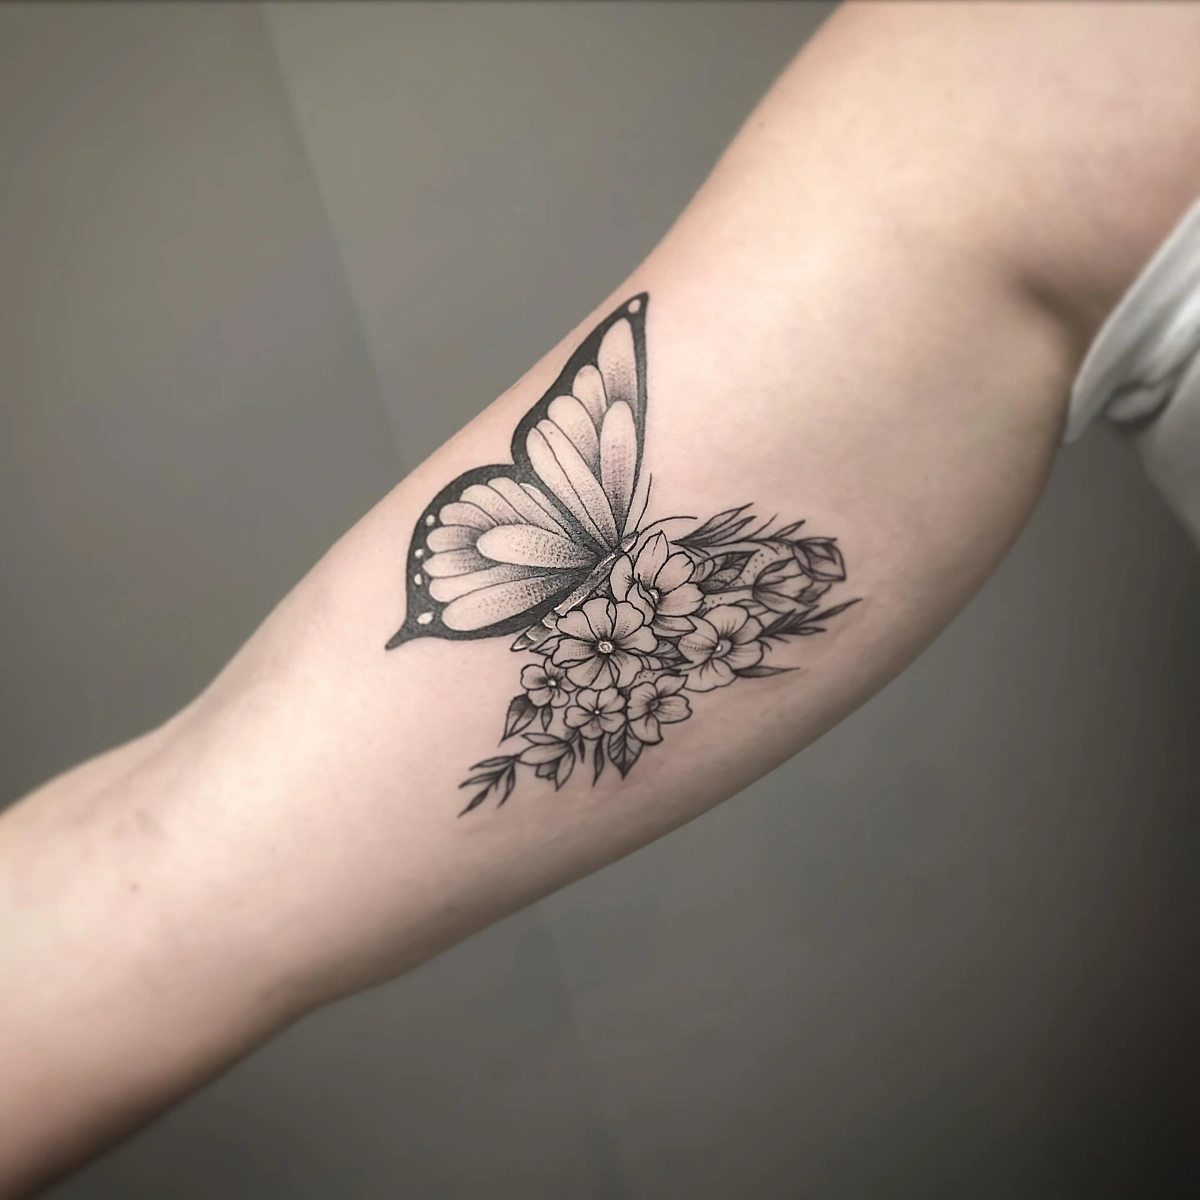 tatouage papillon idee dessin corps bras fleurs petales tiges